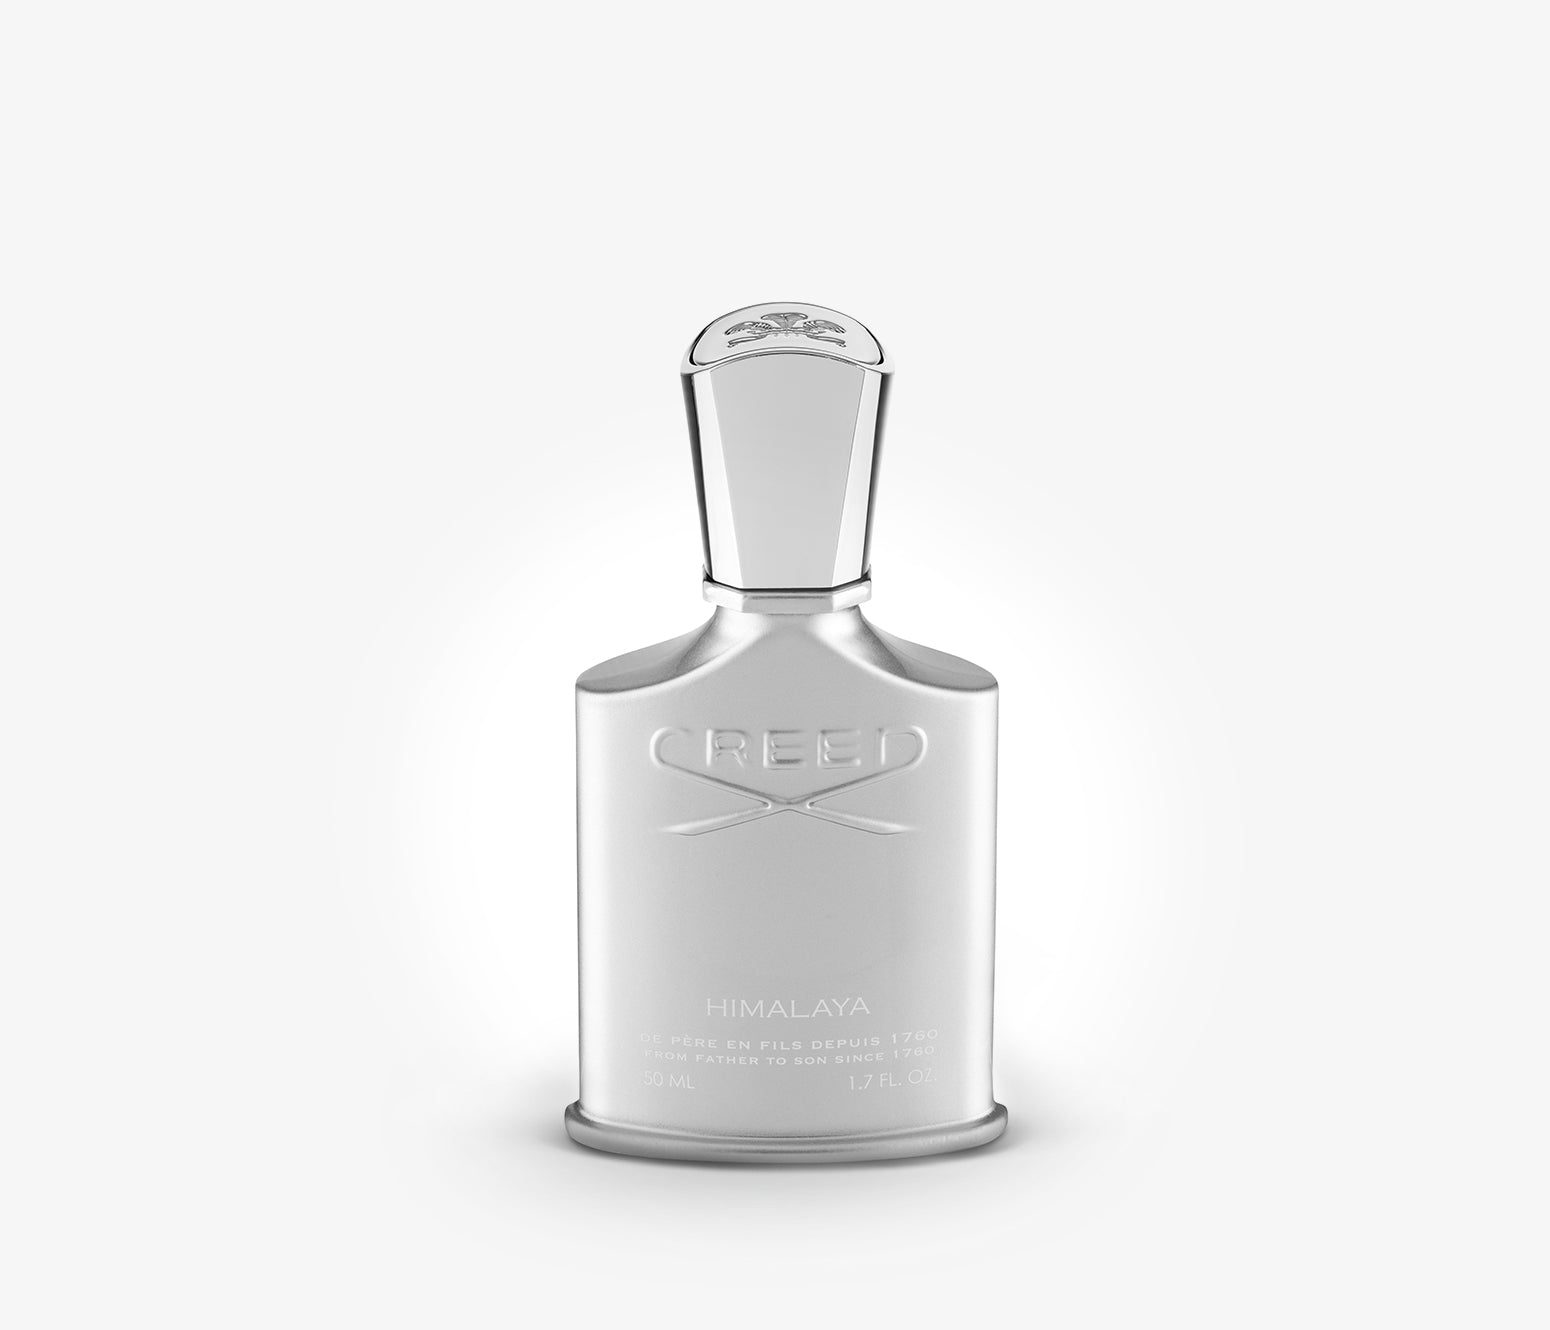 Creed - Himalaya - 50ml - RUF001 - Product Image - Fragrance - Les Senteurs